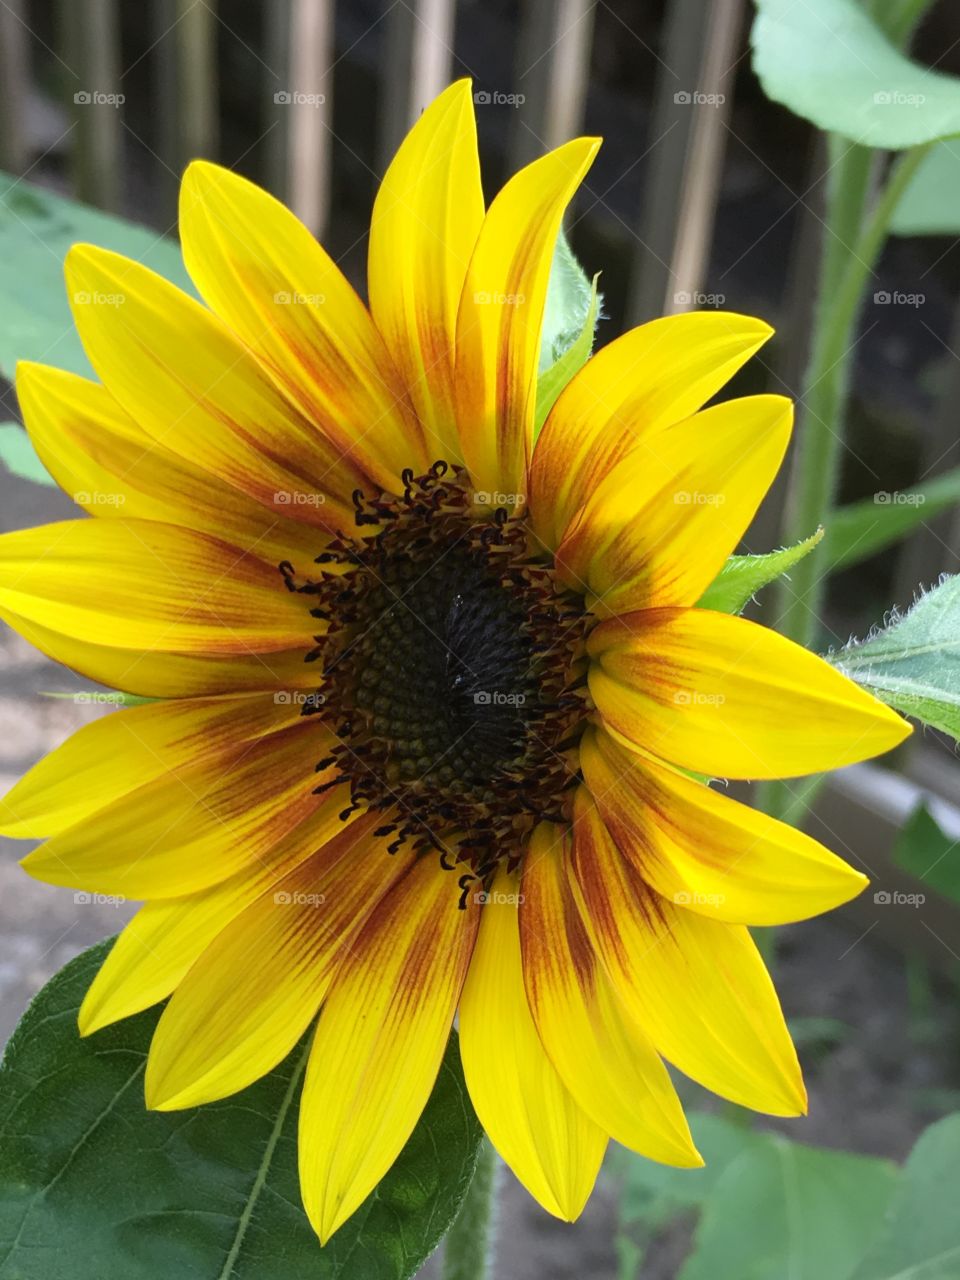 Sunflowers in Summer 